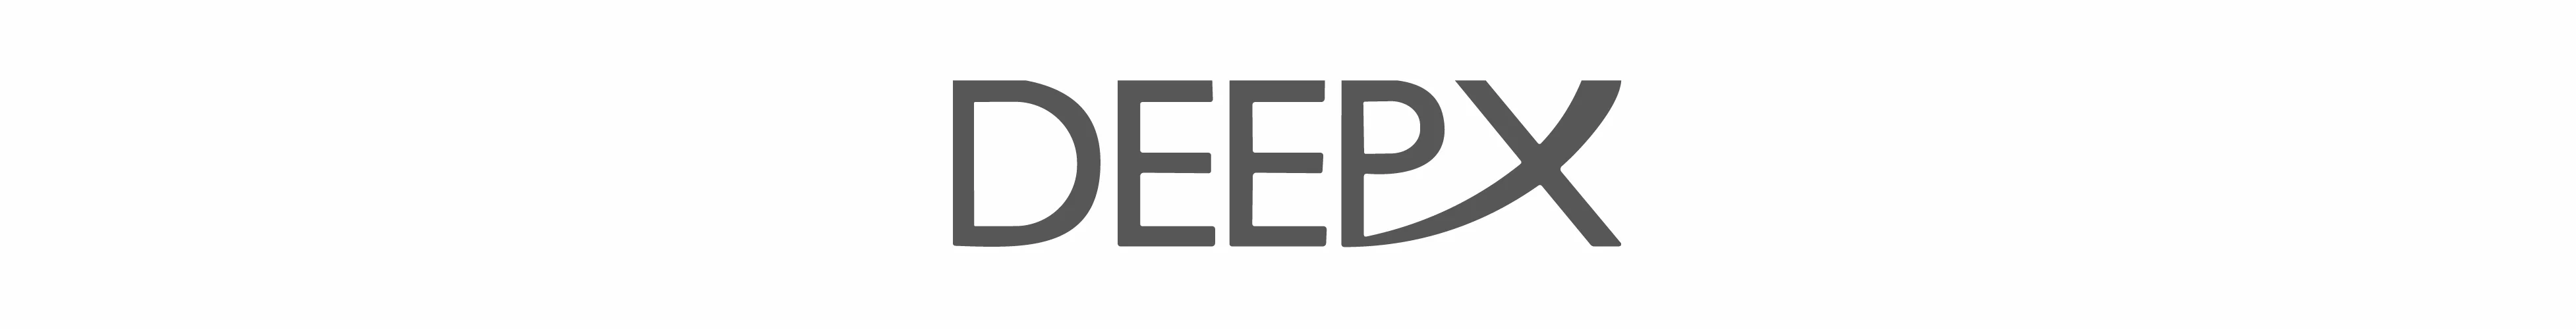 DeepX_logo